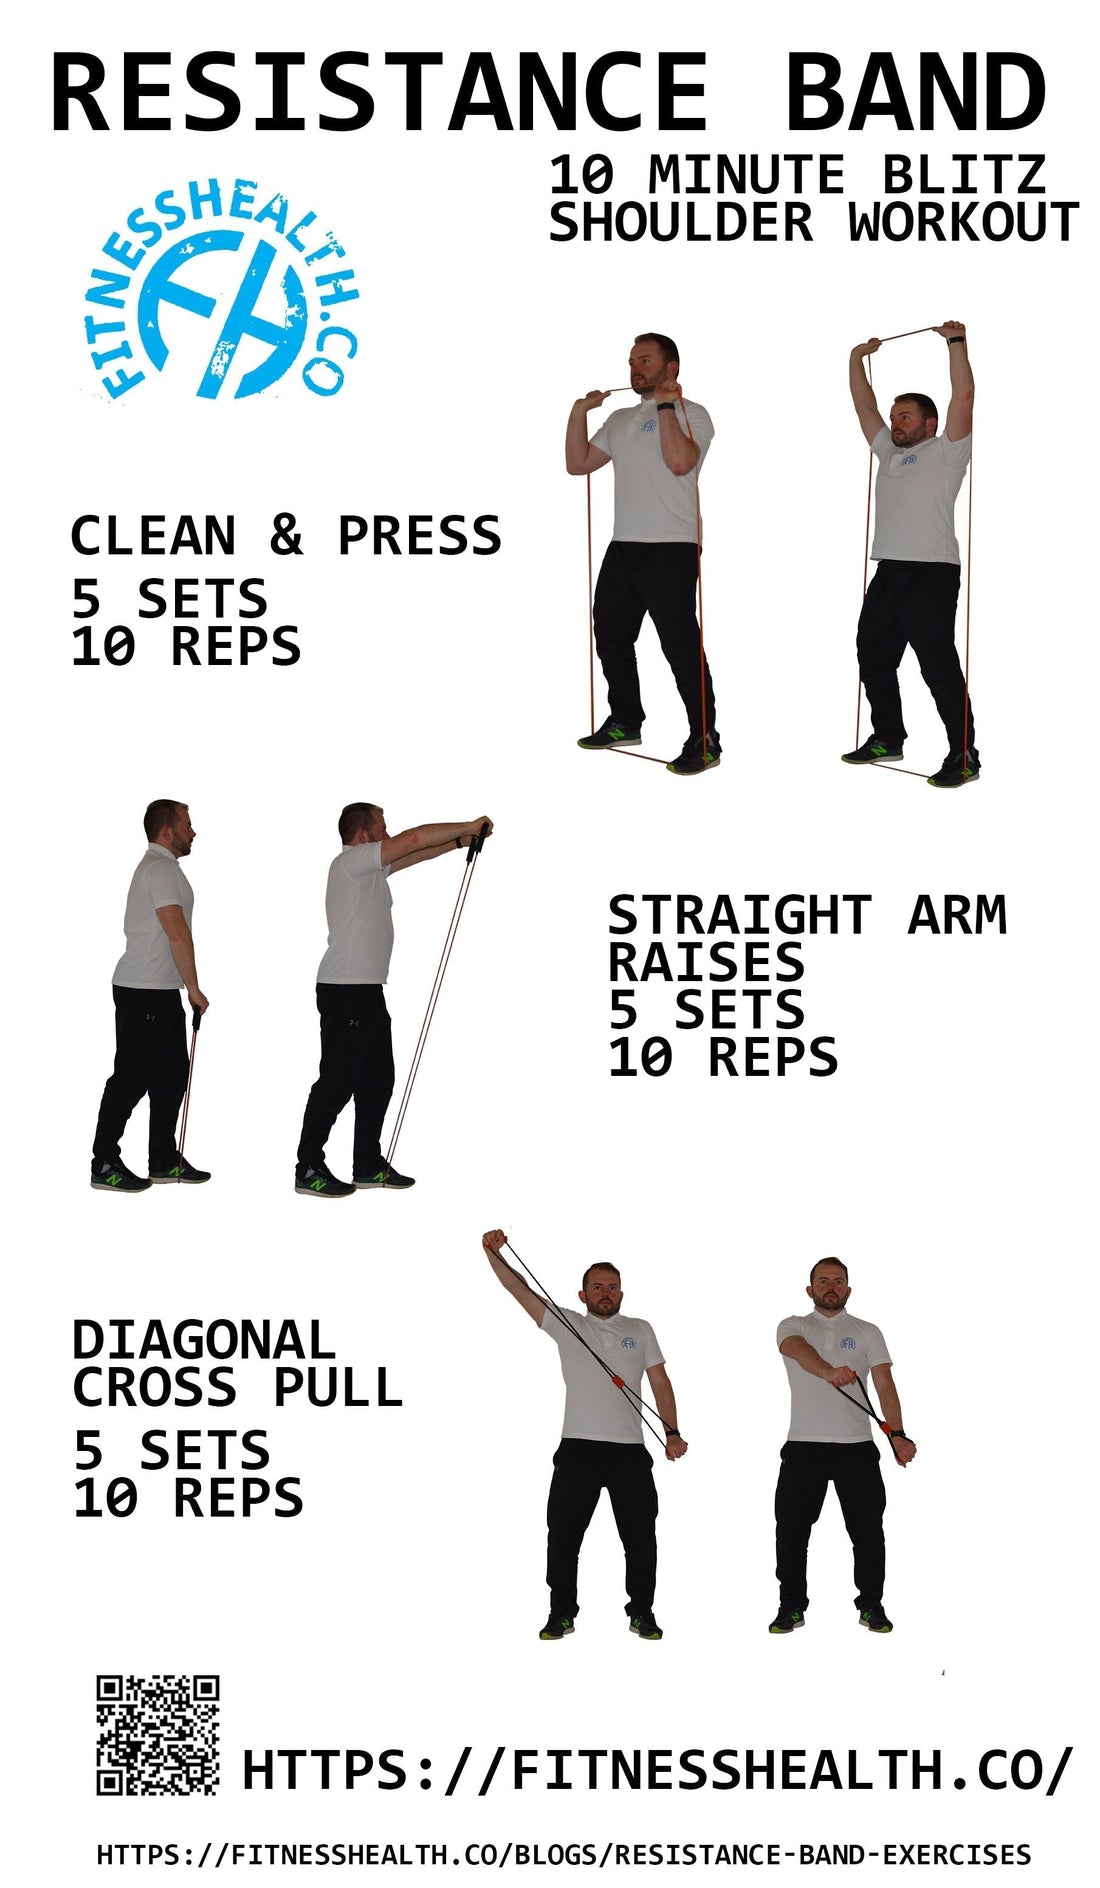 10 minute Resistance band shoulder workout – Fitness Health